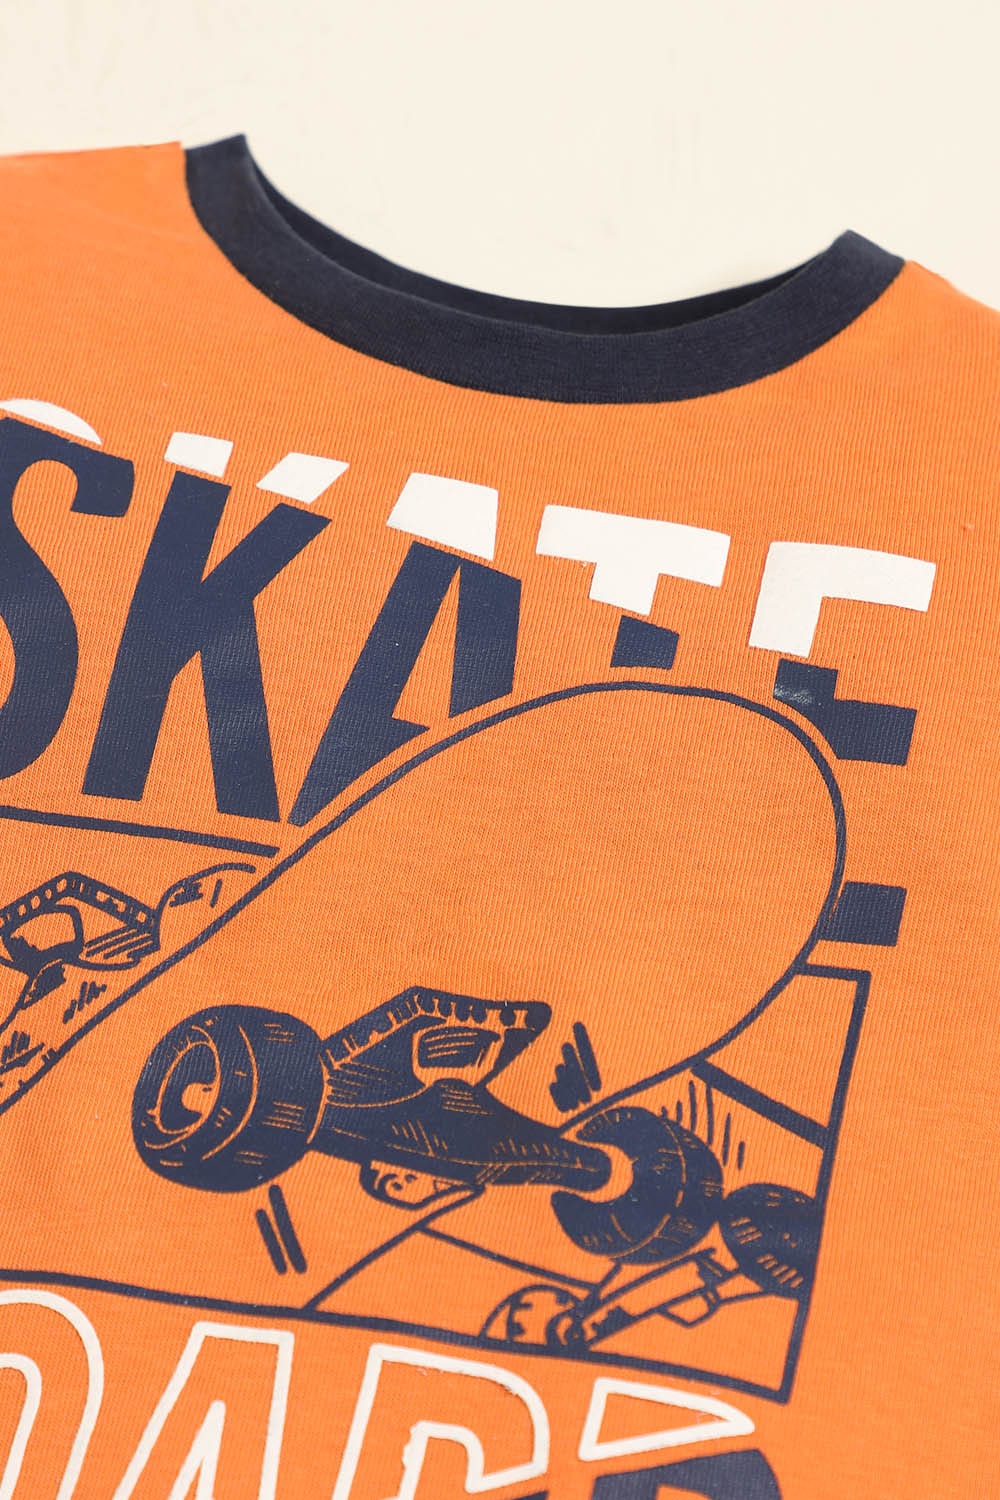 Hope Not Out by Shahid Afridi Girls Knit T-Shirt Boys Orange Skate Board T-Shirt